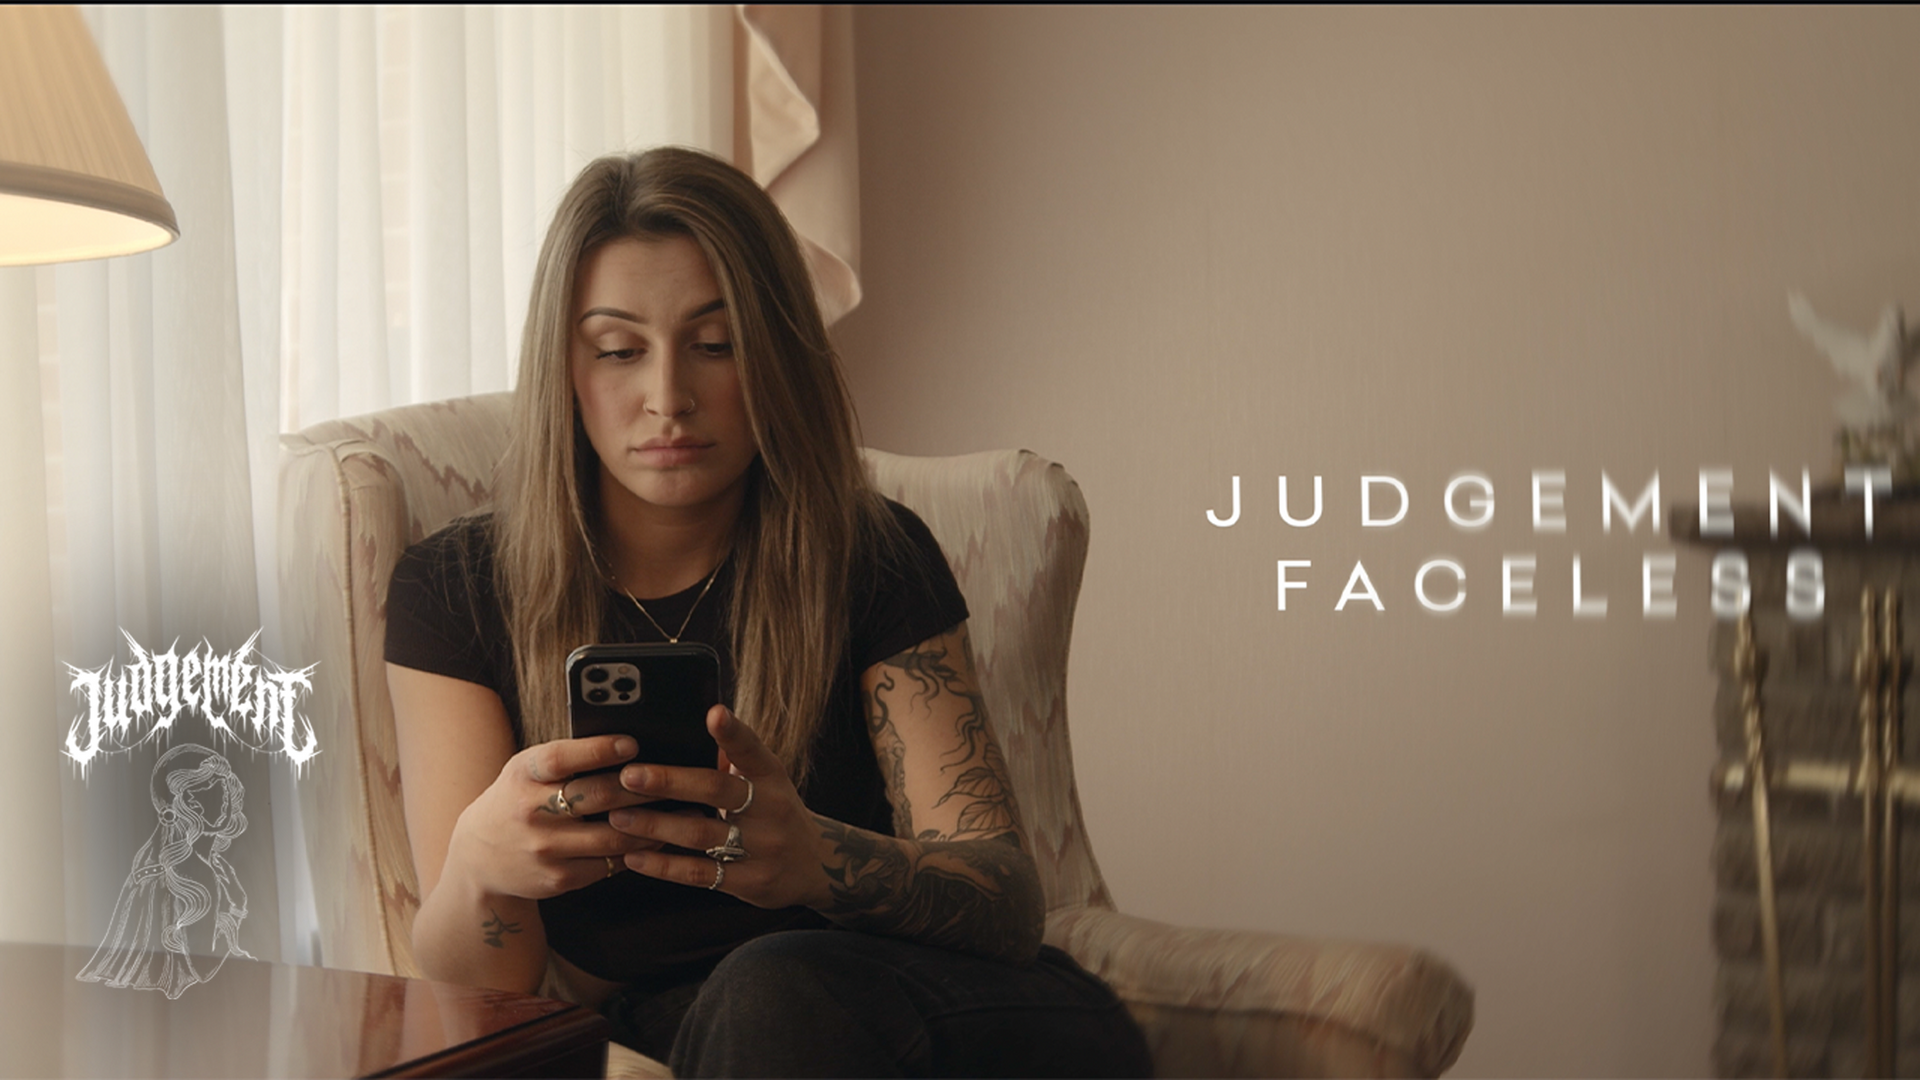 Load video: FACELESS - Judgement (Official Video)